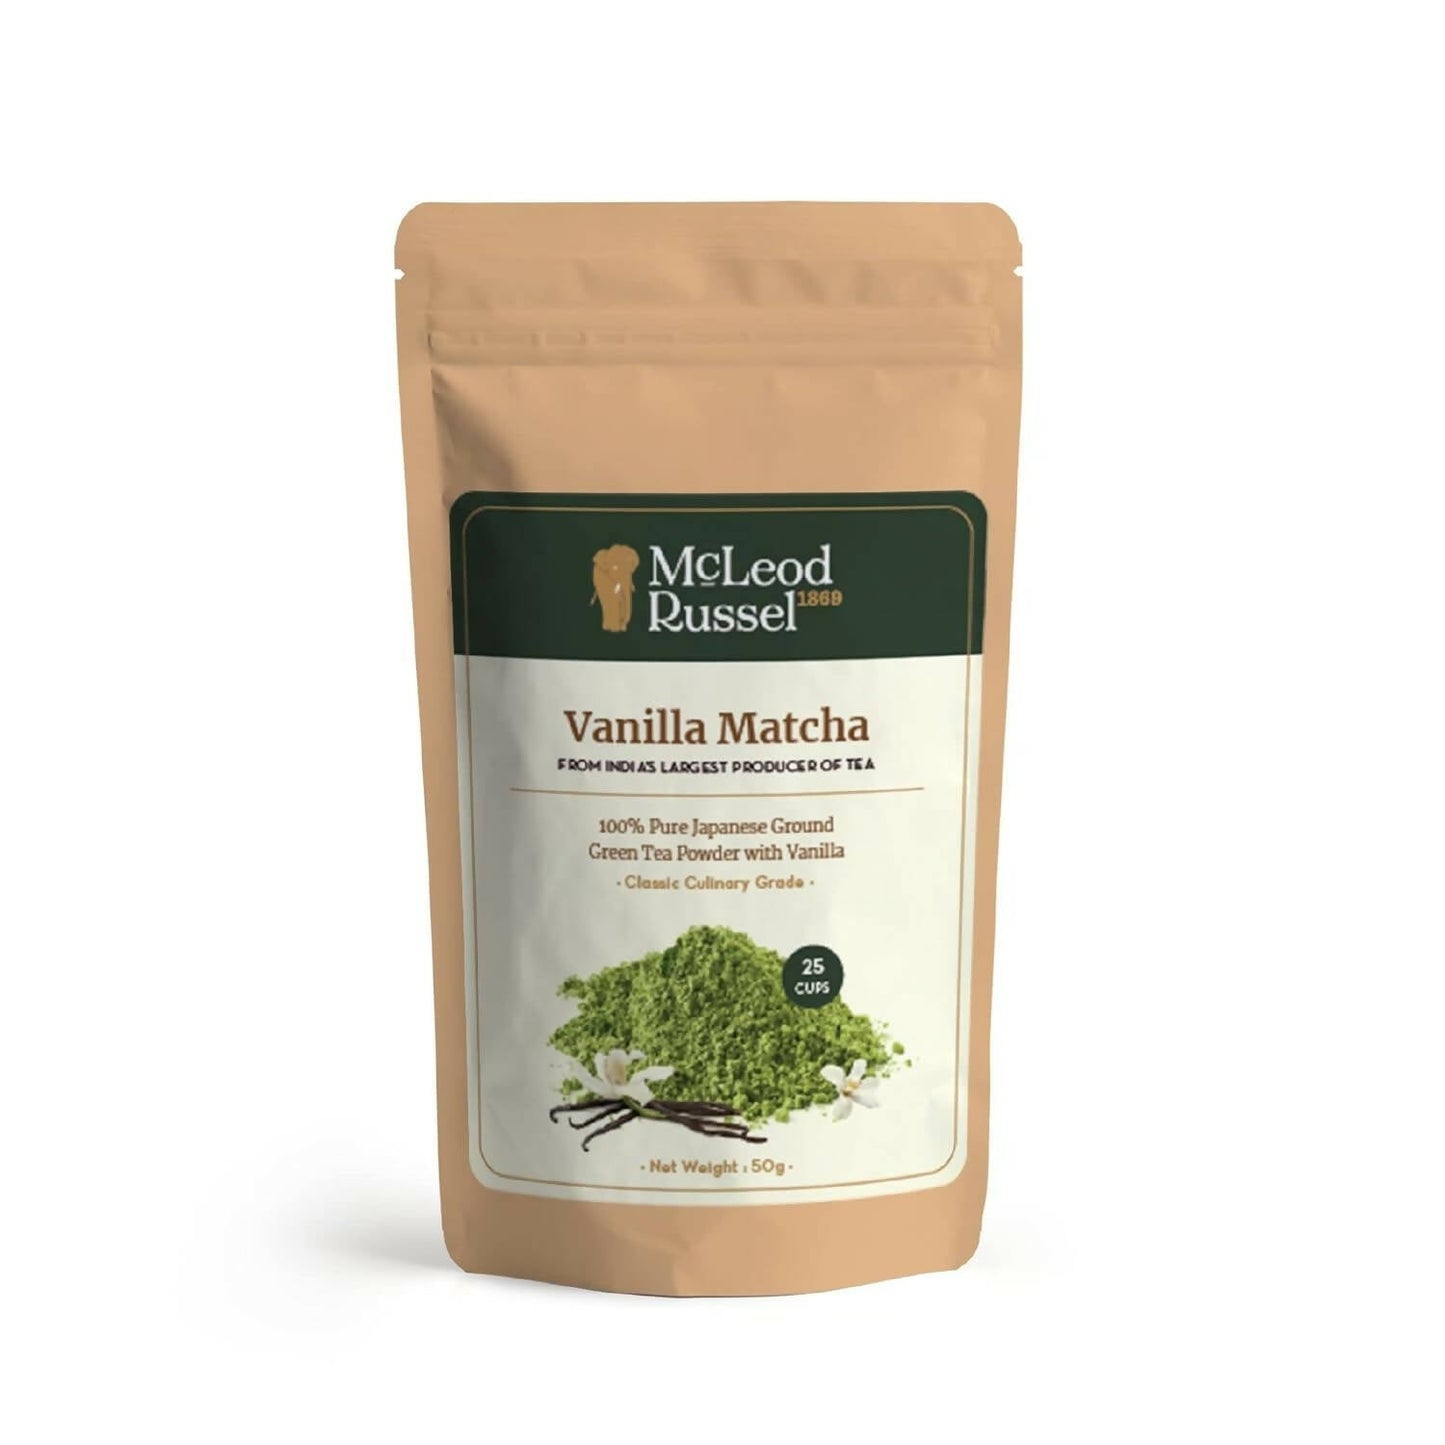 McLeod Russel 1869 Vanilla Matcha - 100% Pure Japanese Matcha Green Tea -  buy in usa 